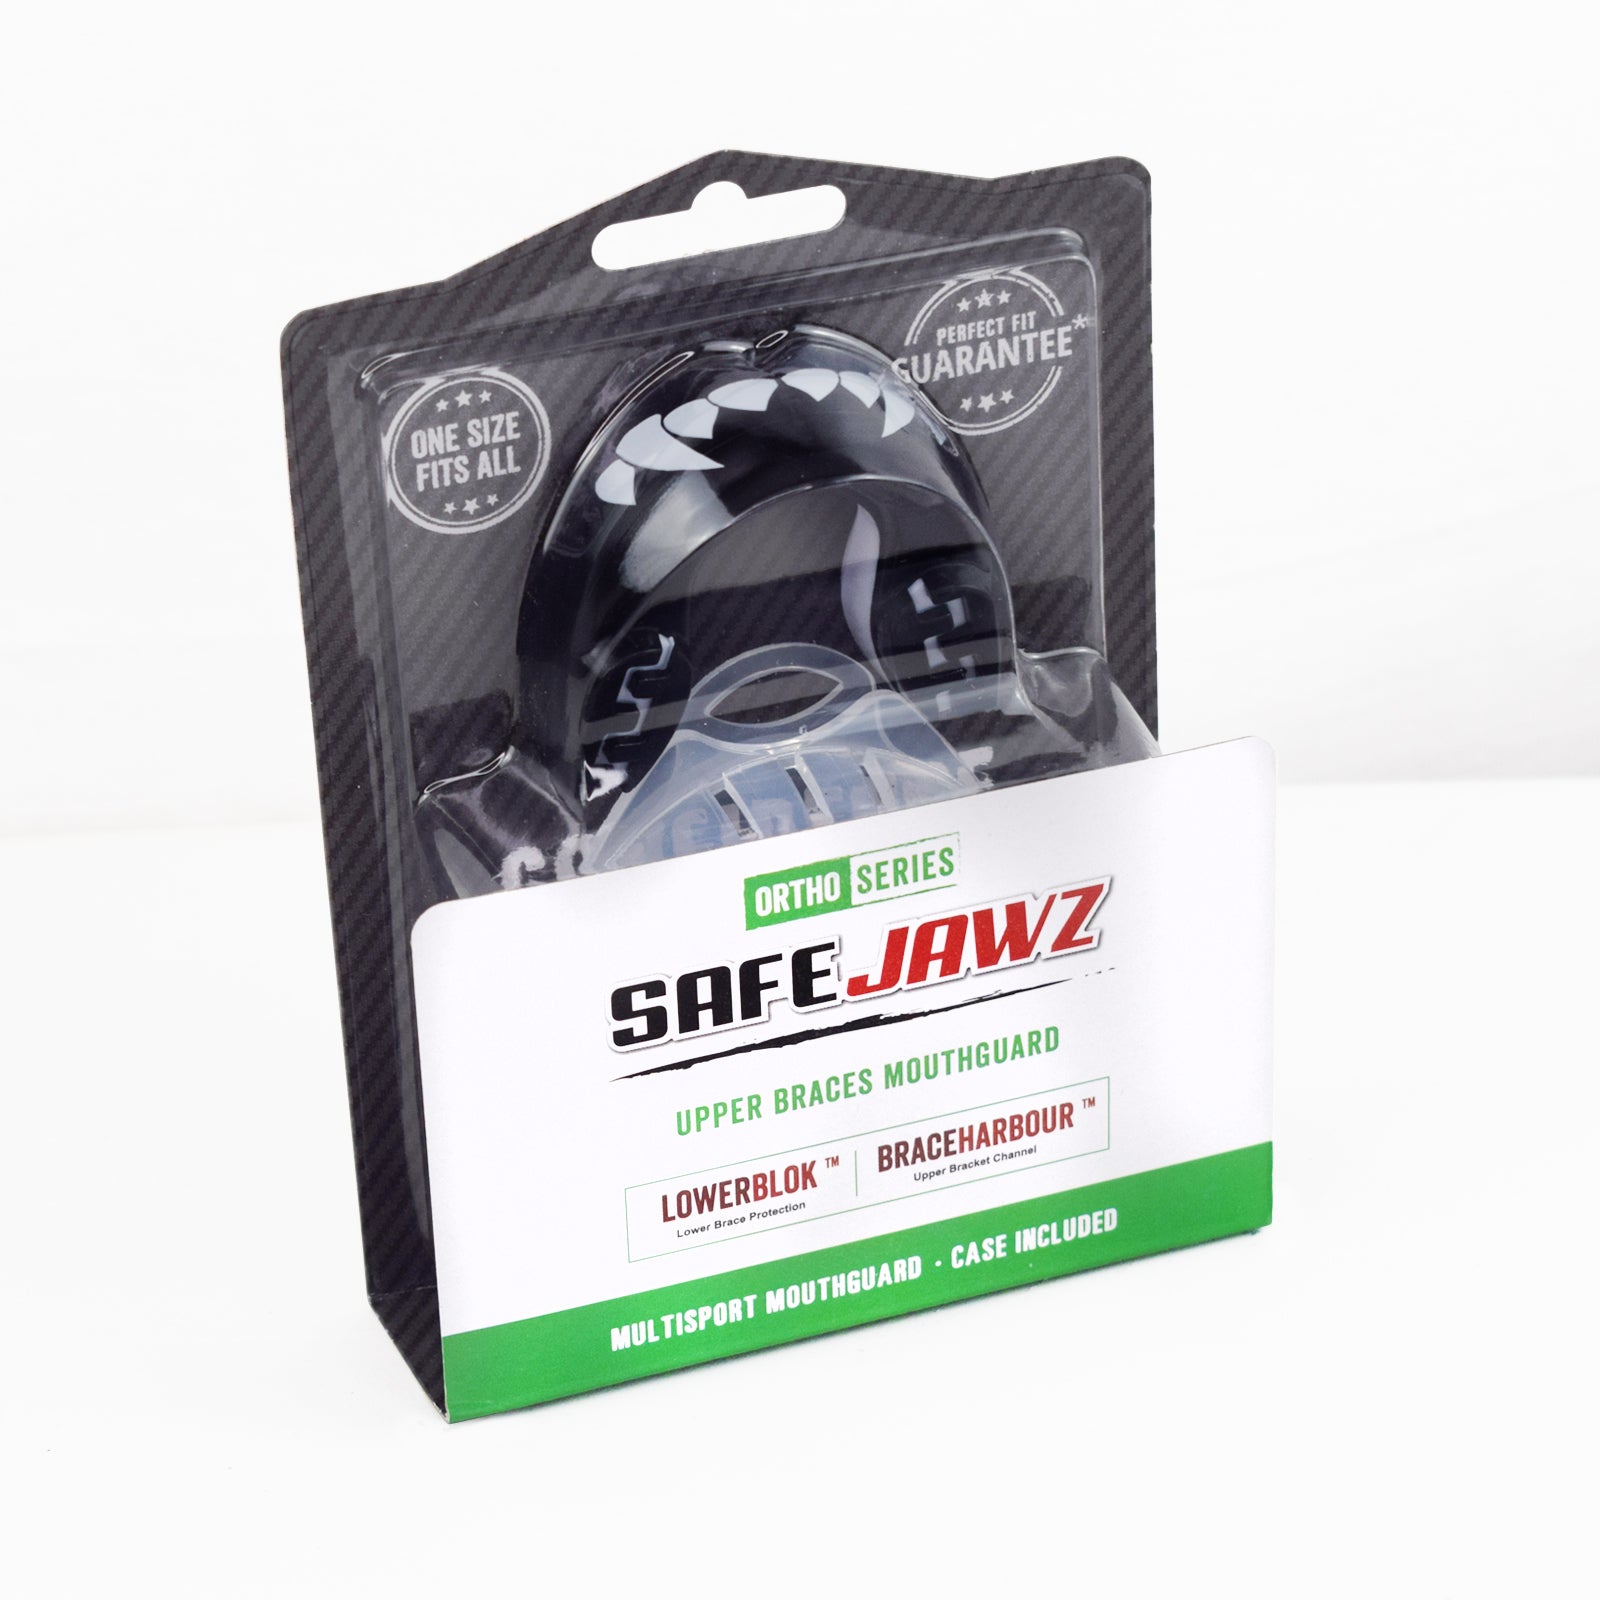 SAFEJAWZ® Ortho Series 'Fangz' Mouthguard for Braces. - SAFEJAWZ gum shield